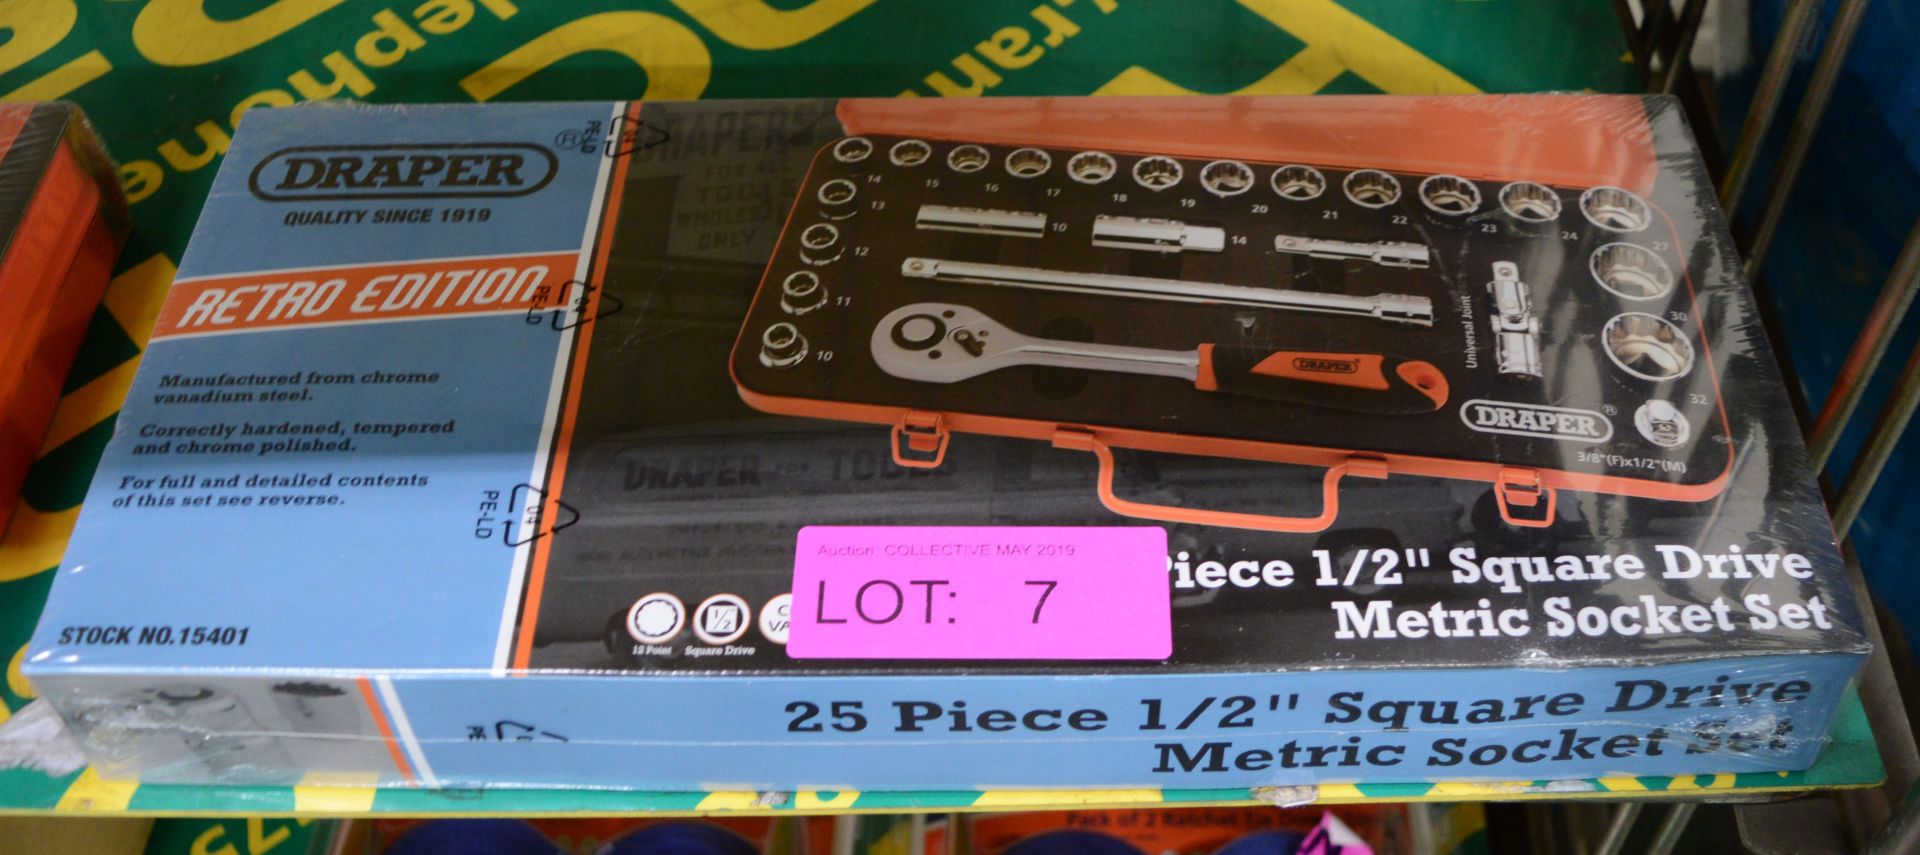 Draper "Retro" 25 Piece 1/2" Square Drive Metric Socket Set - Unopened.